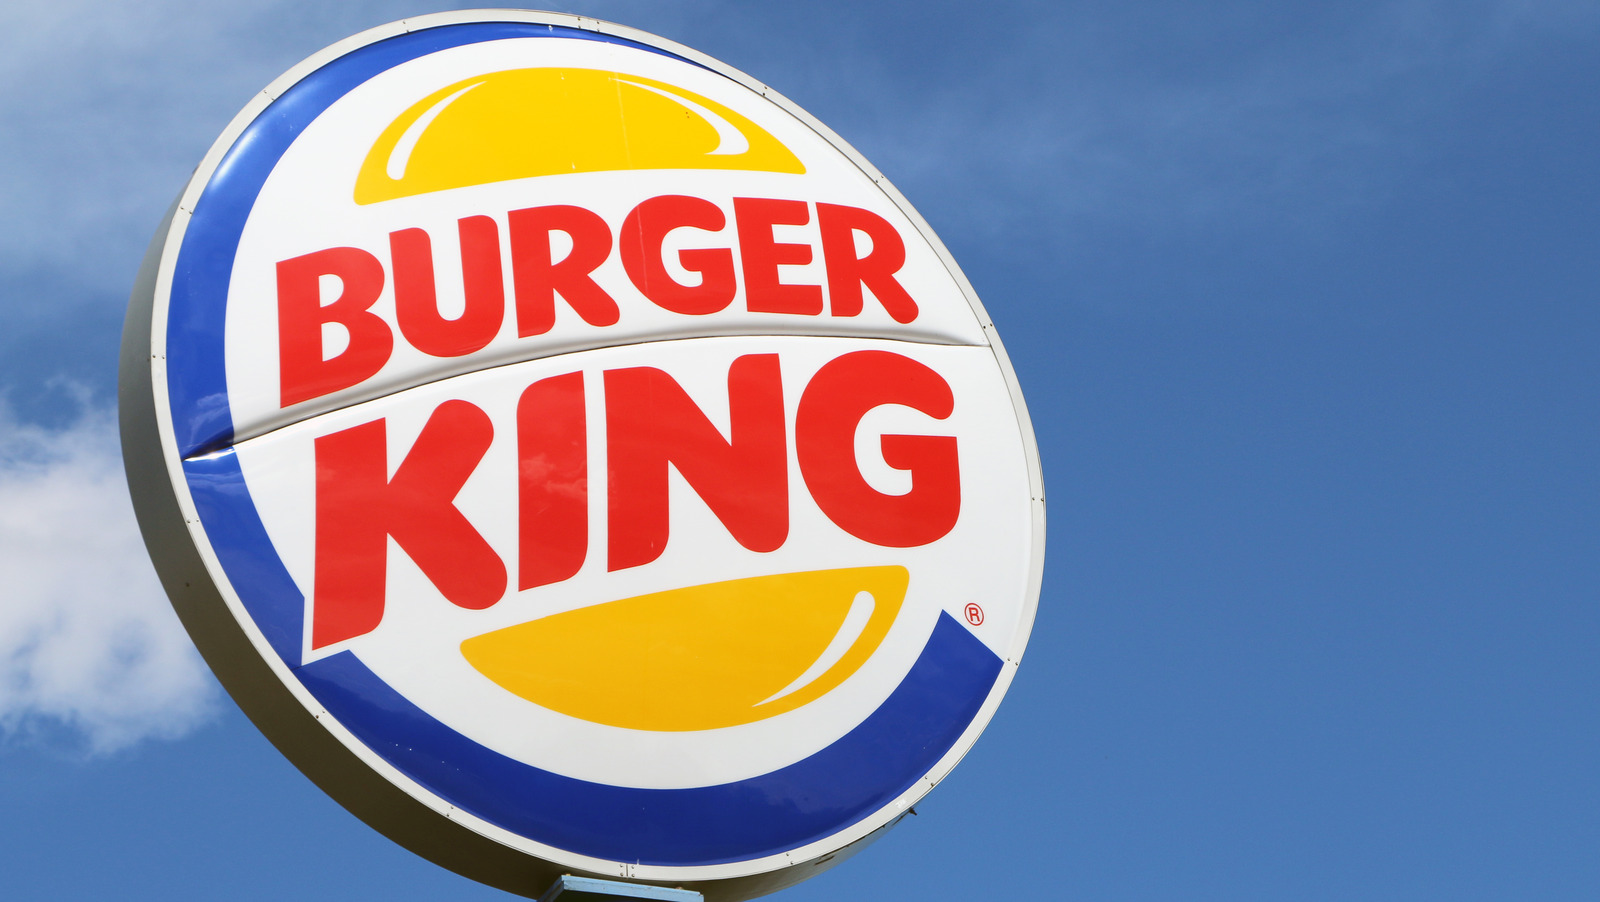 Burger King Logo and symbol, meaning, history, sign.